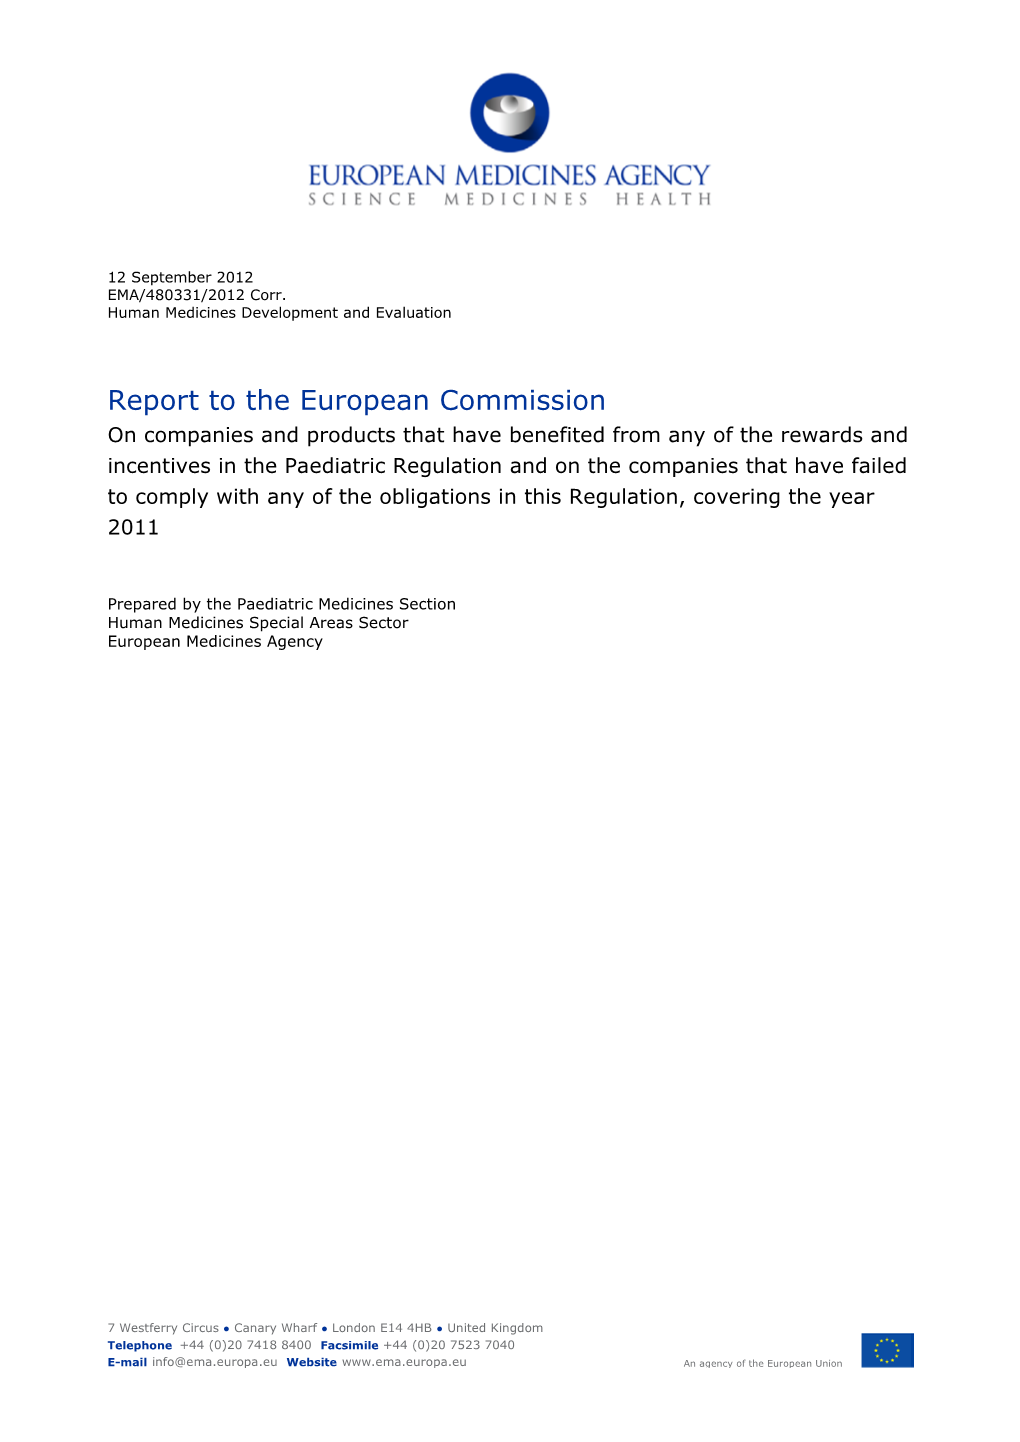 Report on Paediatric Regulations 2011 Corr